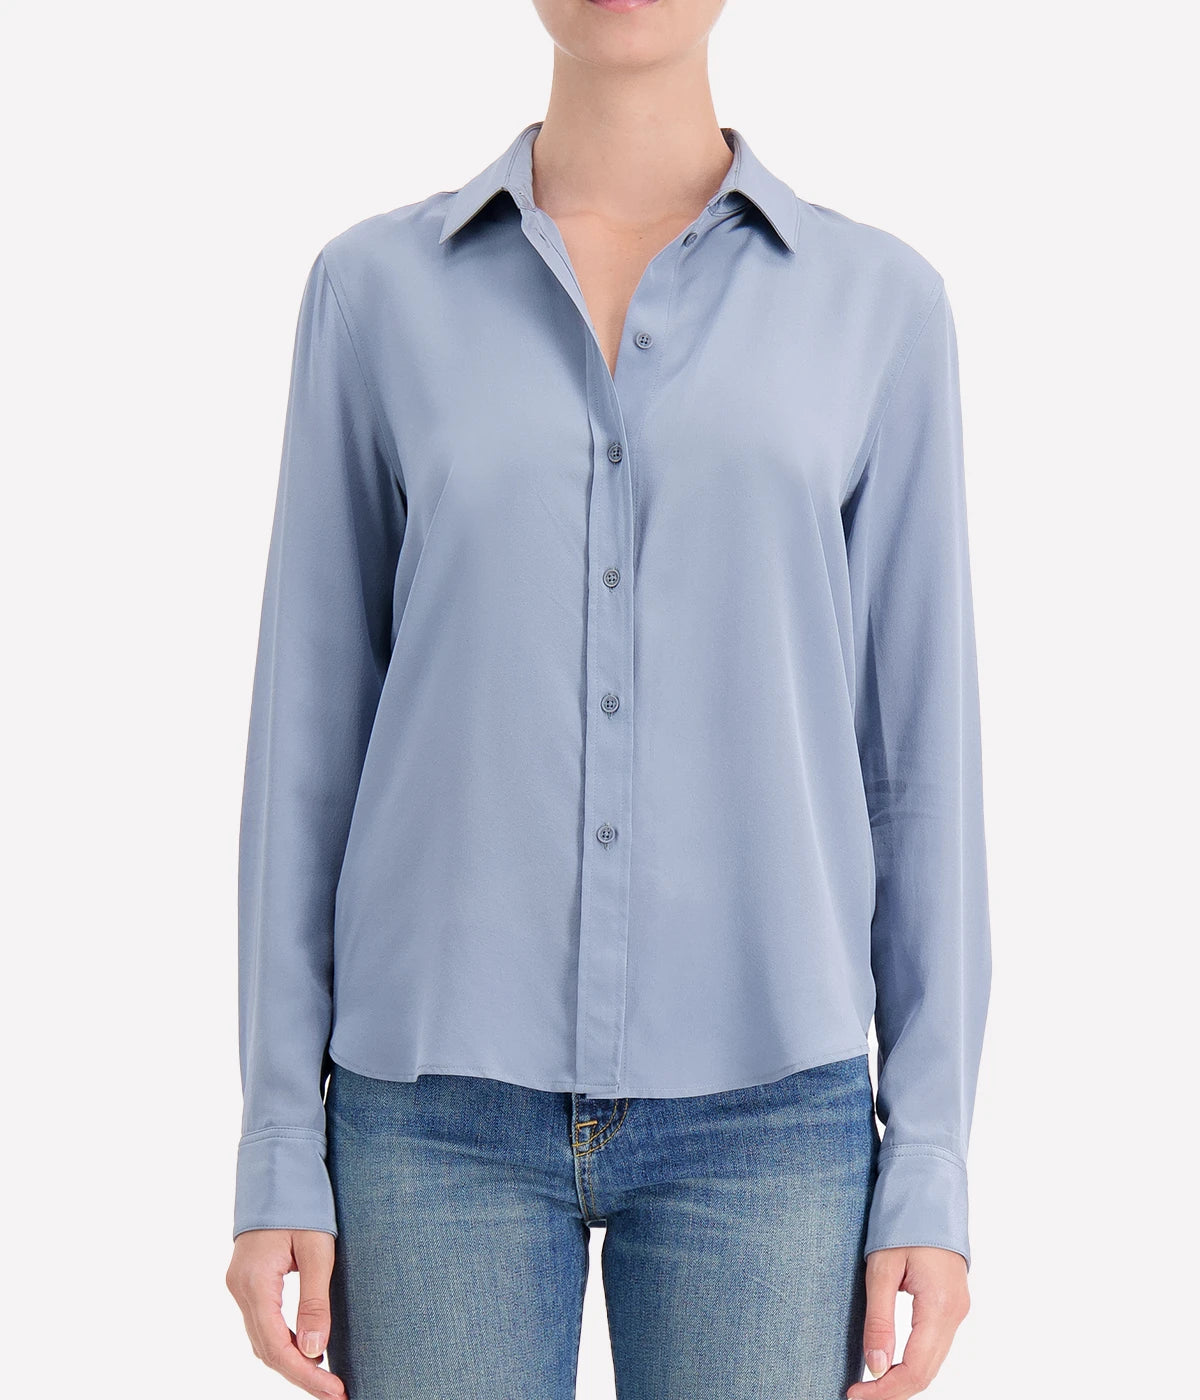 Gaia Slim Shirt in Vintage Blue